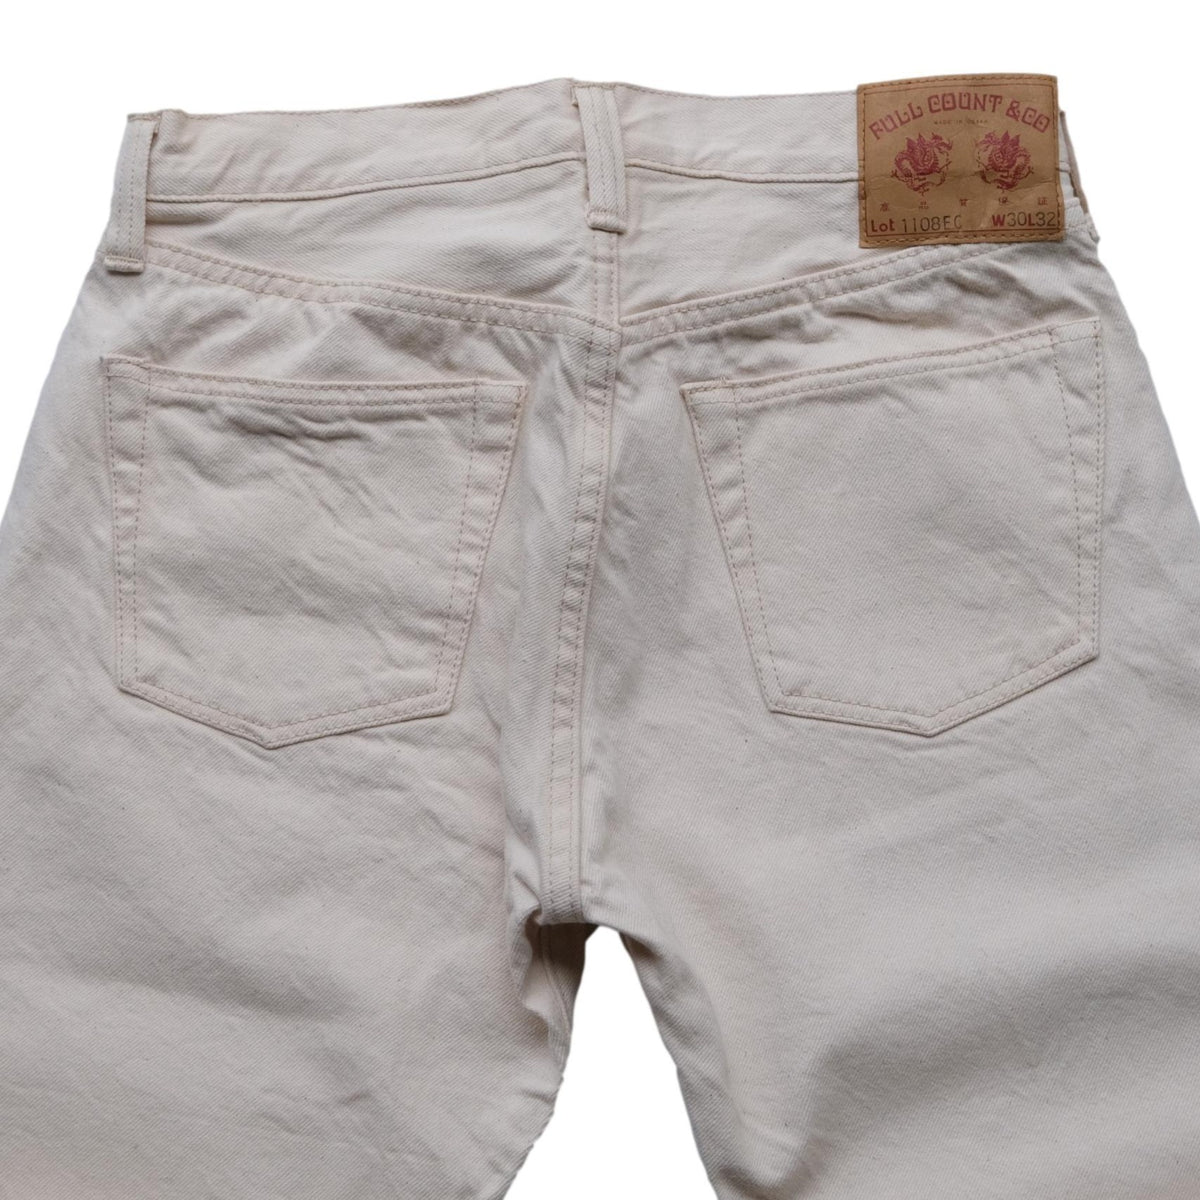 Fullcount 1108EC Ecru Selvedge Jeans (Slim Straight) - Okayama Denim